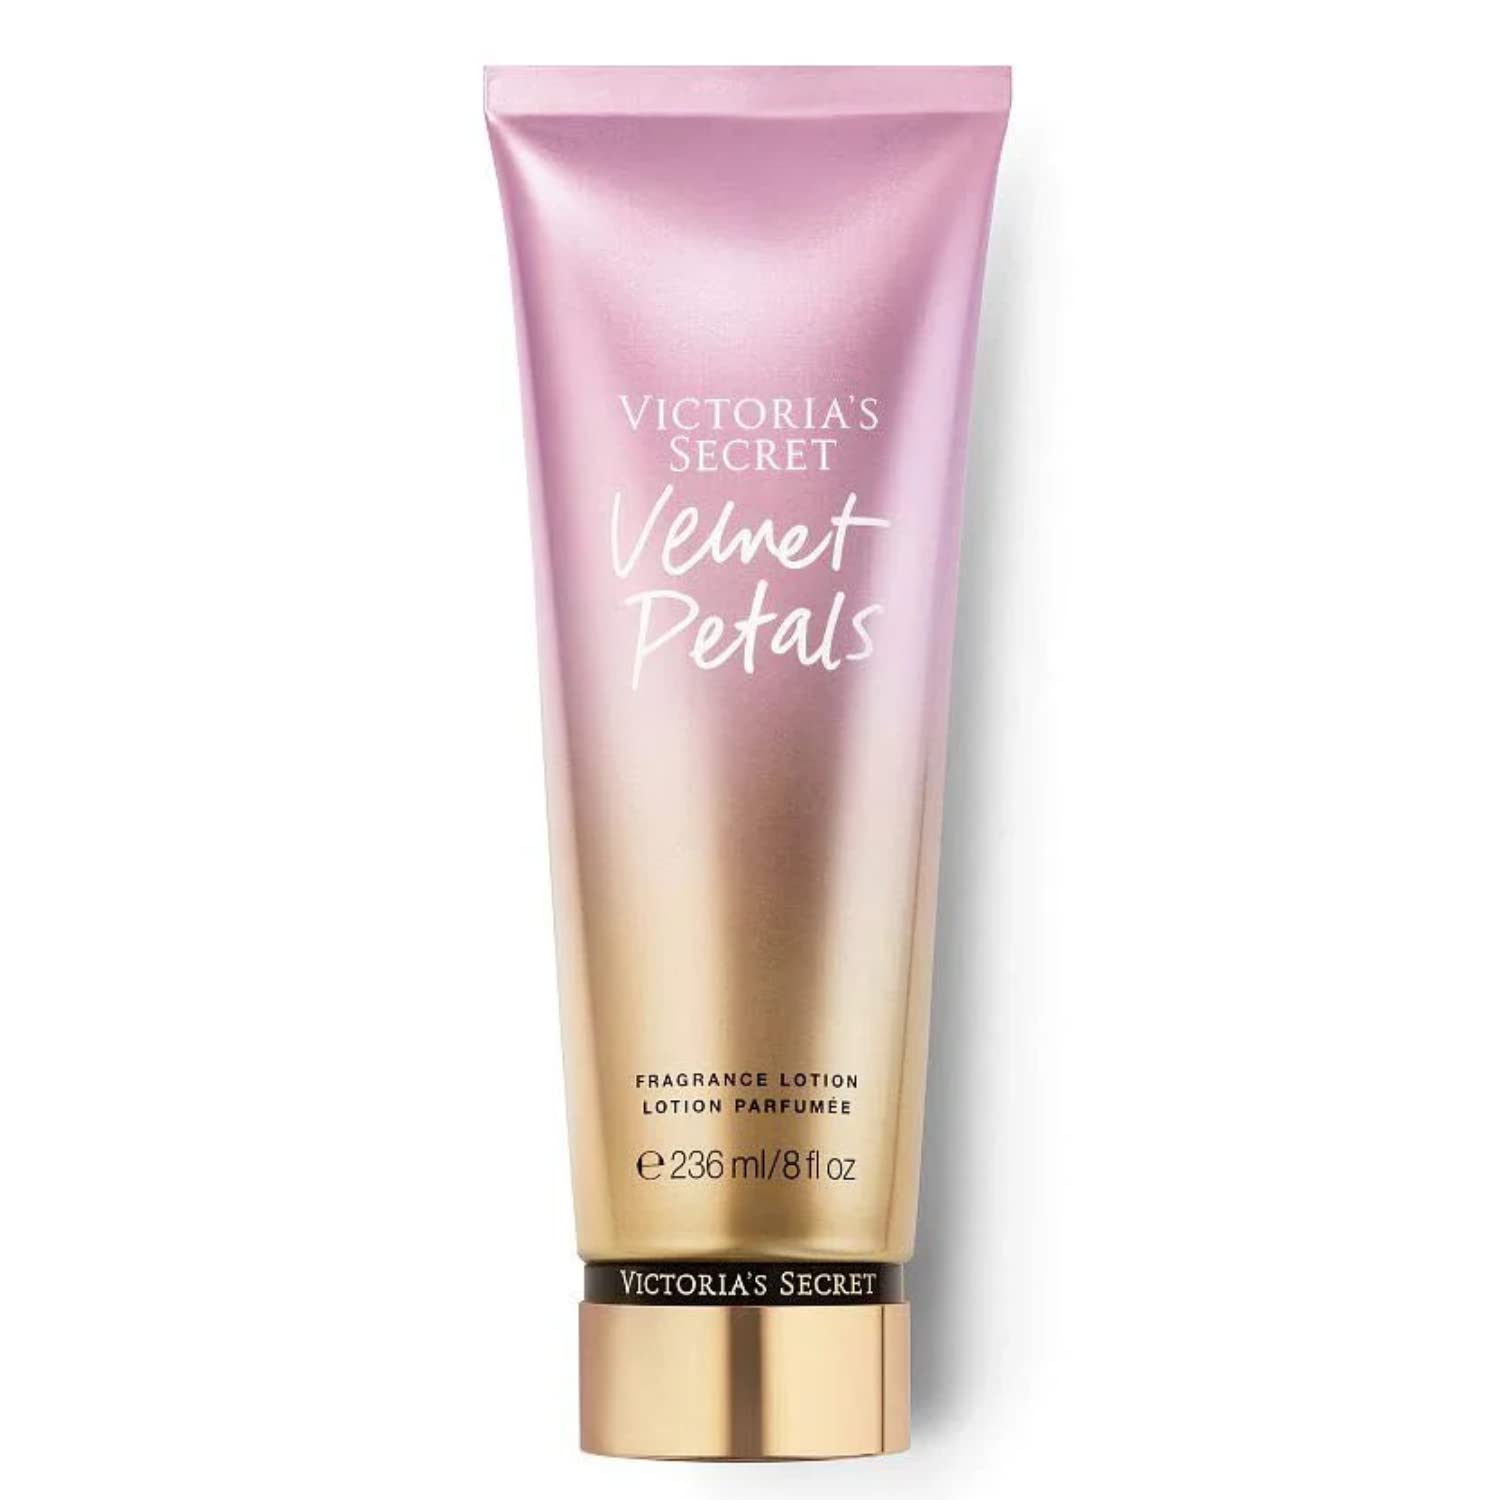 Victoria's Secret Velvet Petals Fragrance Mist and Body Lotion Gift Set (Velvet Petals)